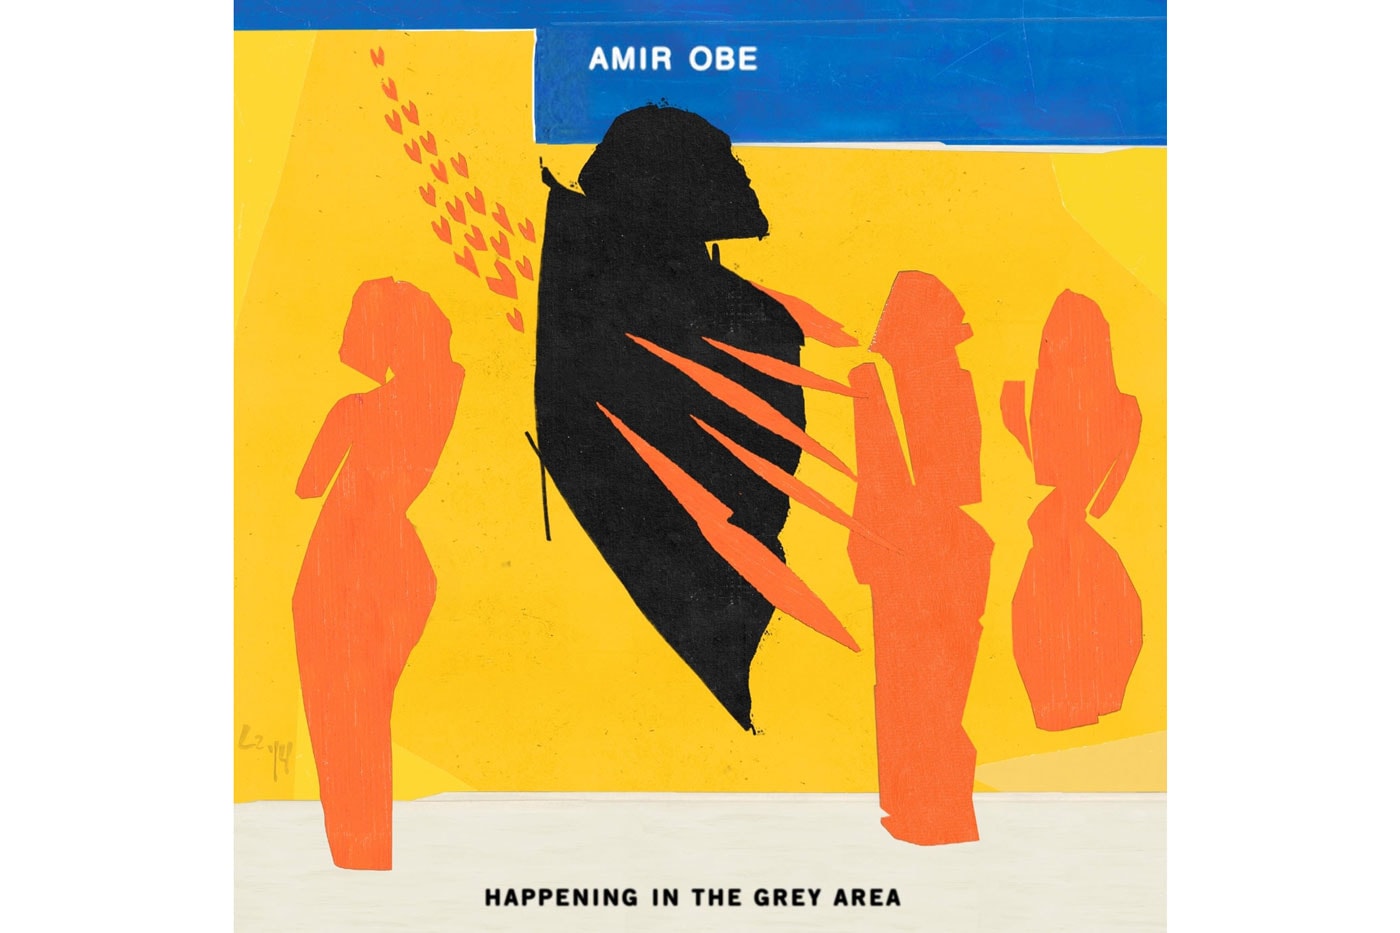 PARTYNEXTDOOR featuring Amir Obè - I'm Good